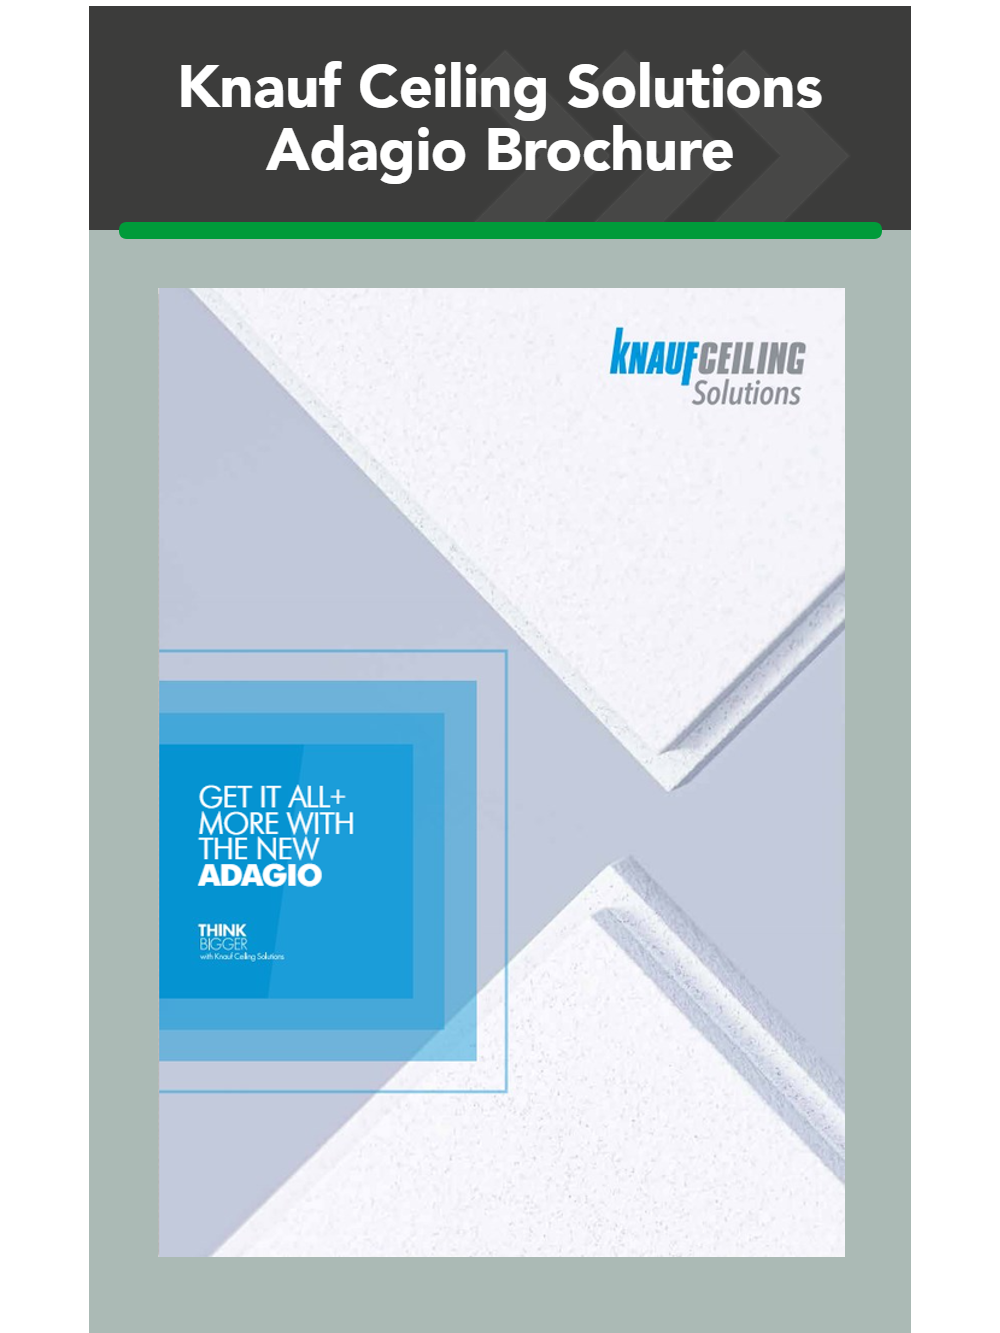 Knauf Ceilings Solutions Adagio Brochure